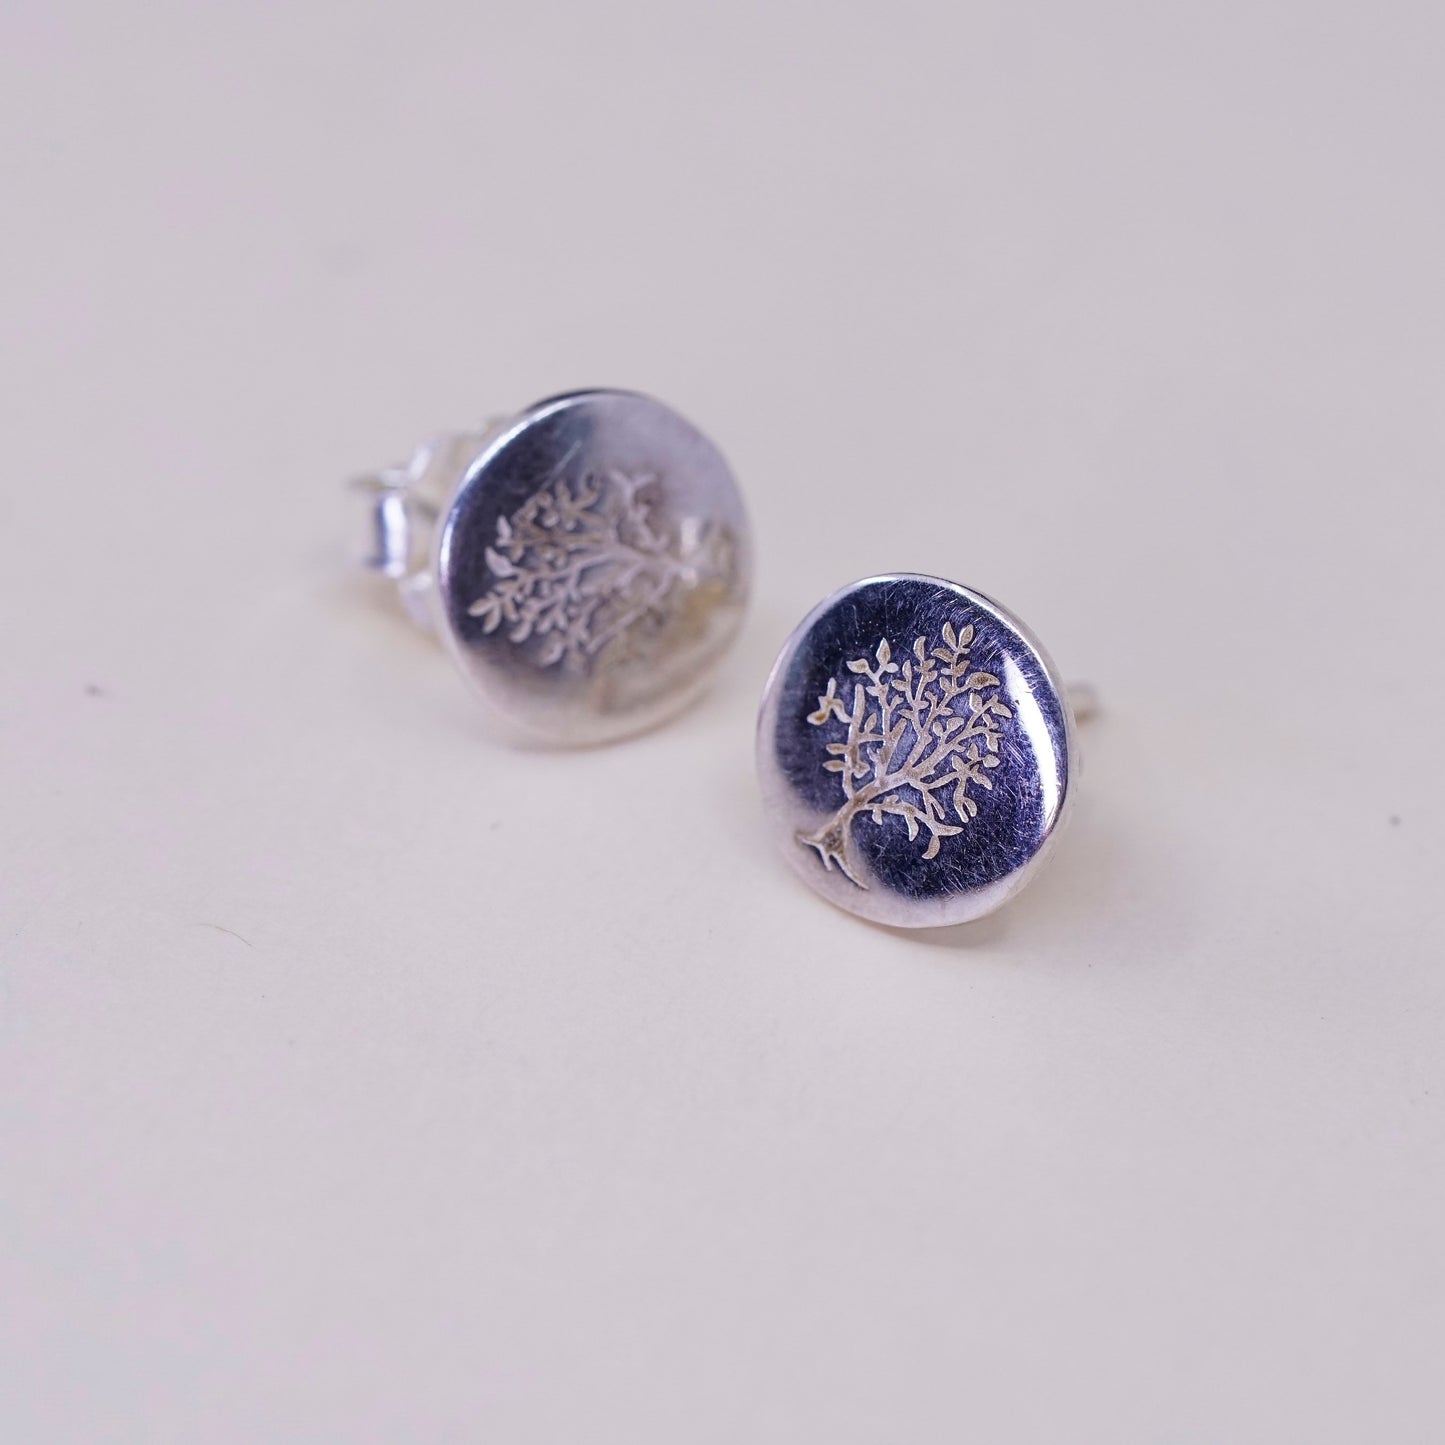 Vintage sterling silver handmade earrings, 925 circle studs with tree